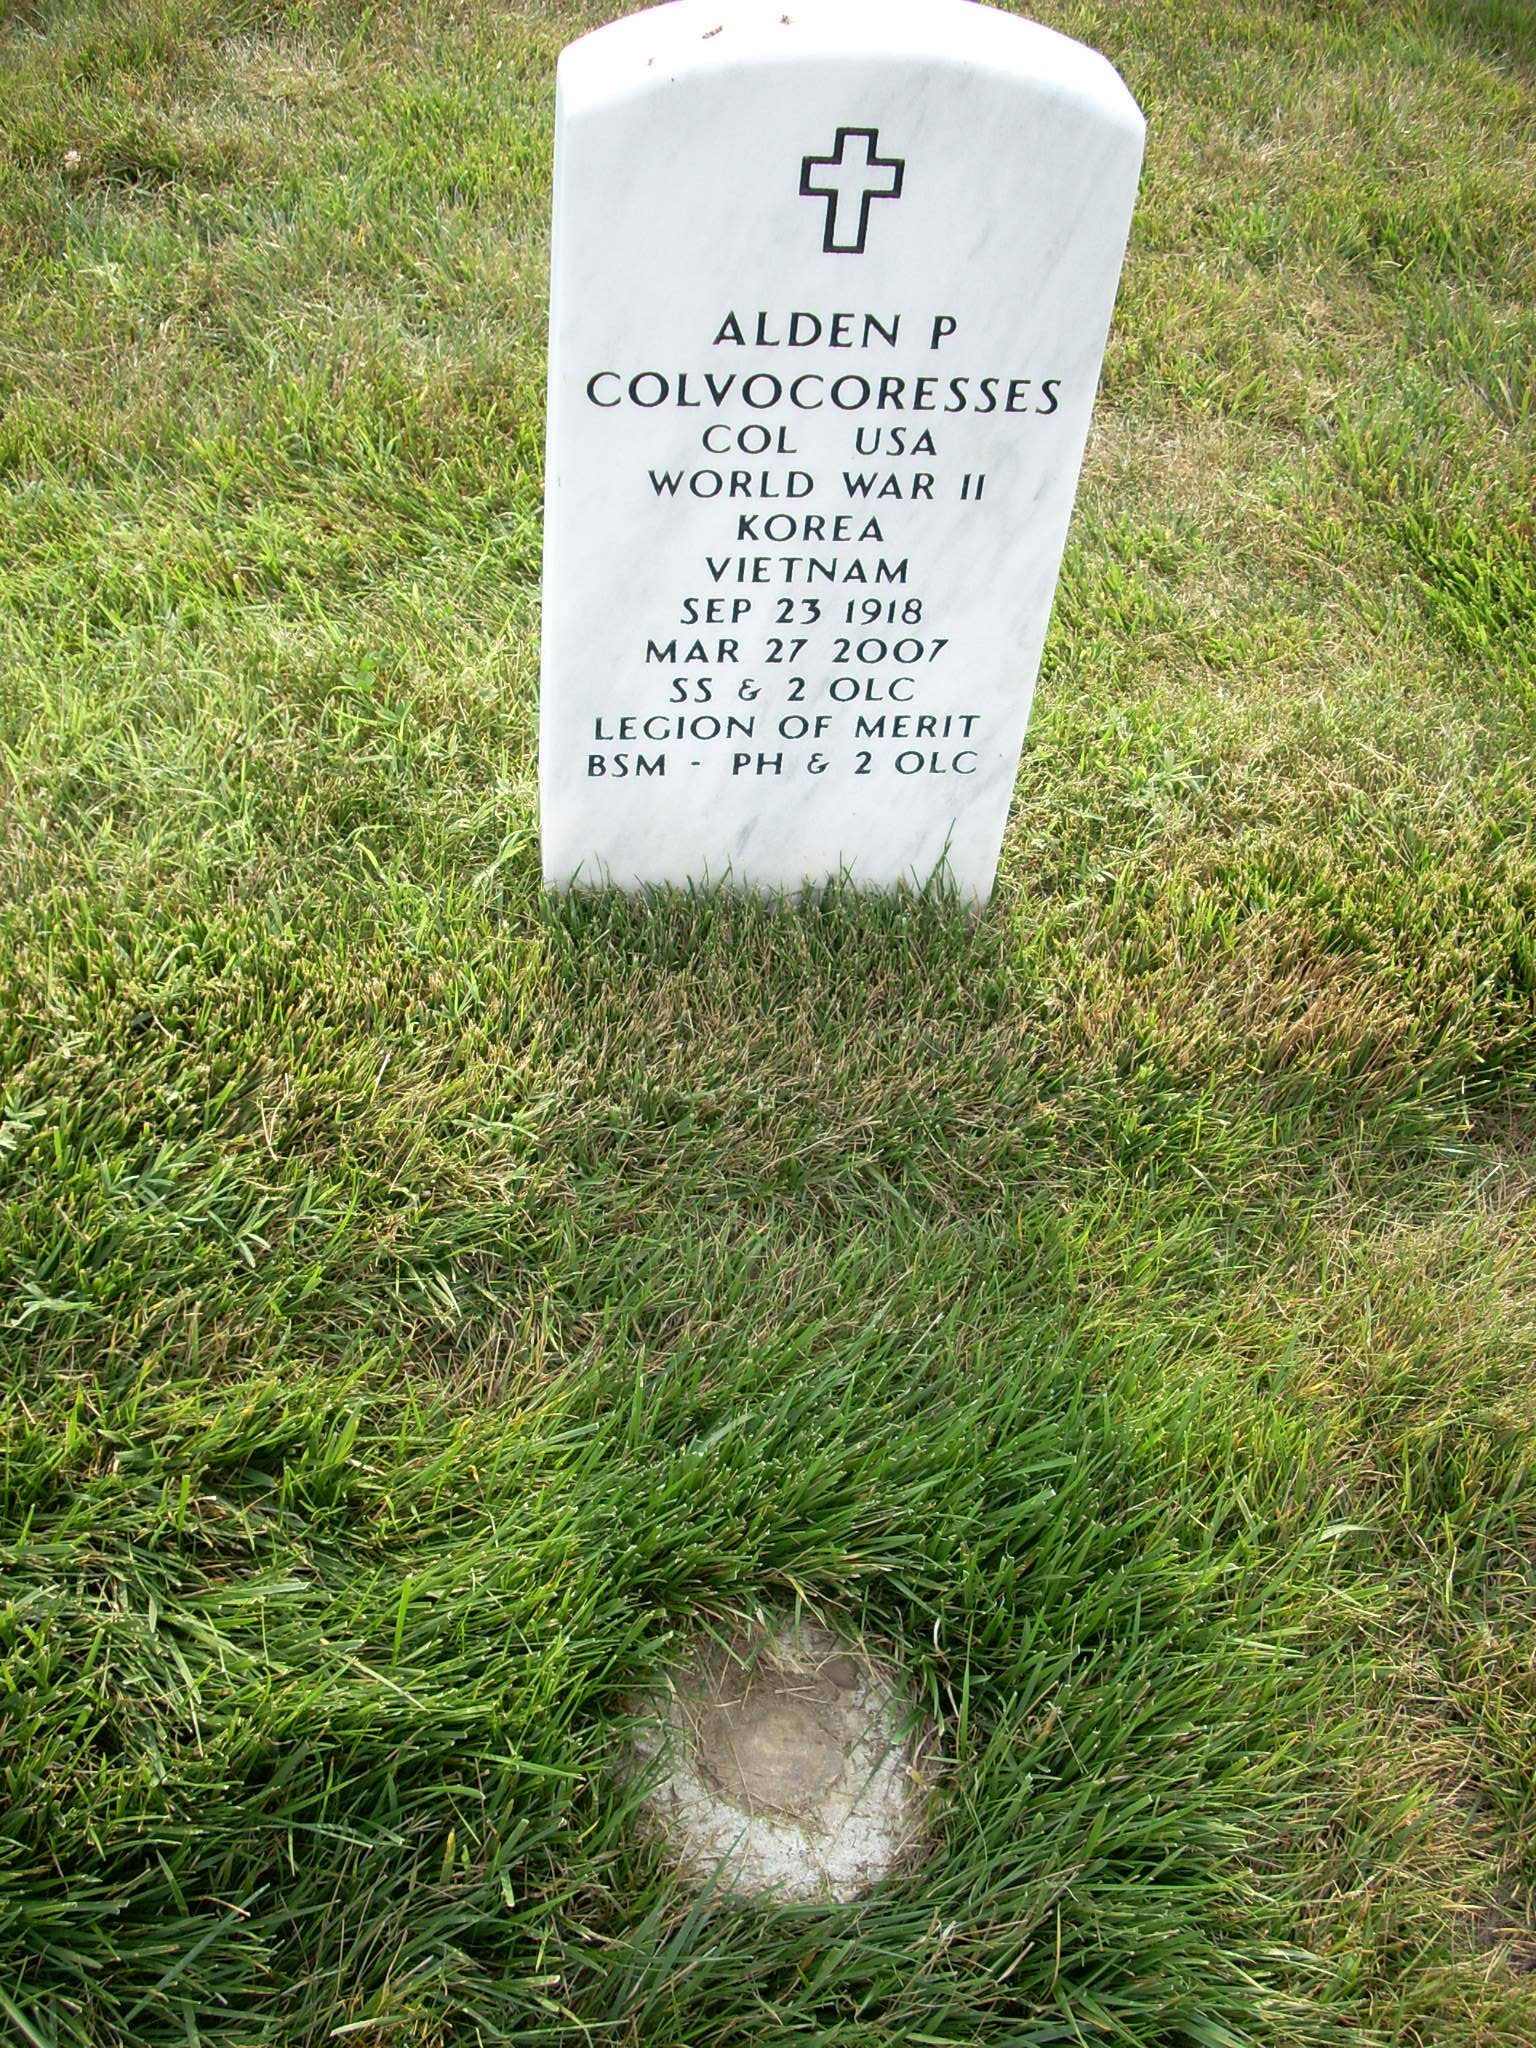 apcolovocoresses-gravesite-photo-july-2008-001